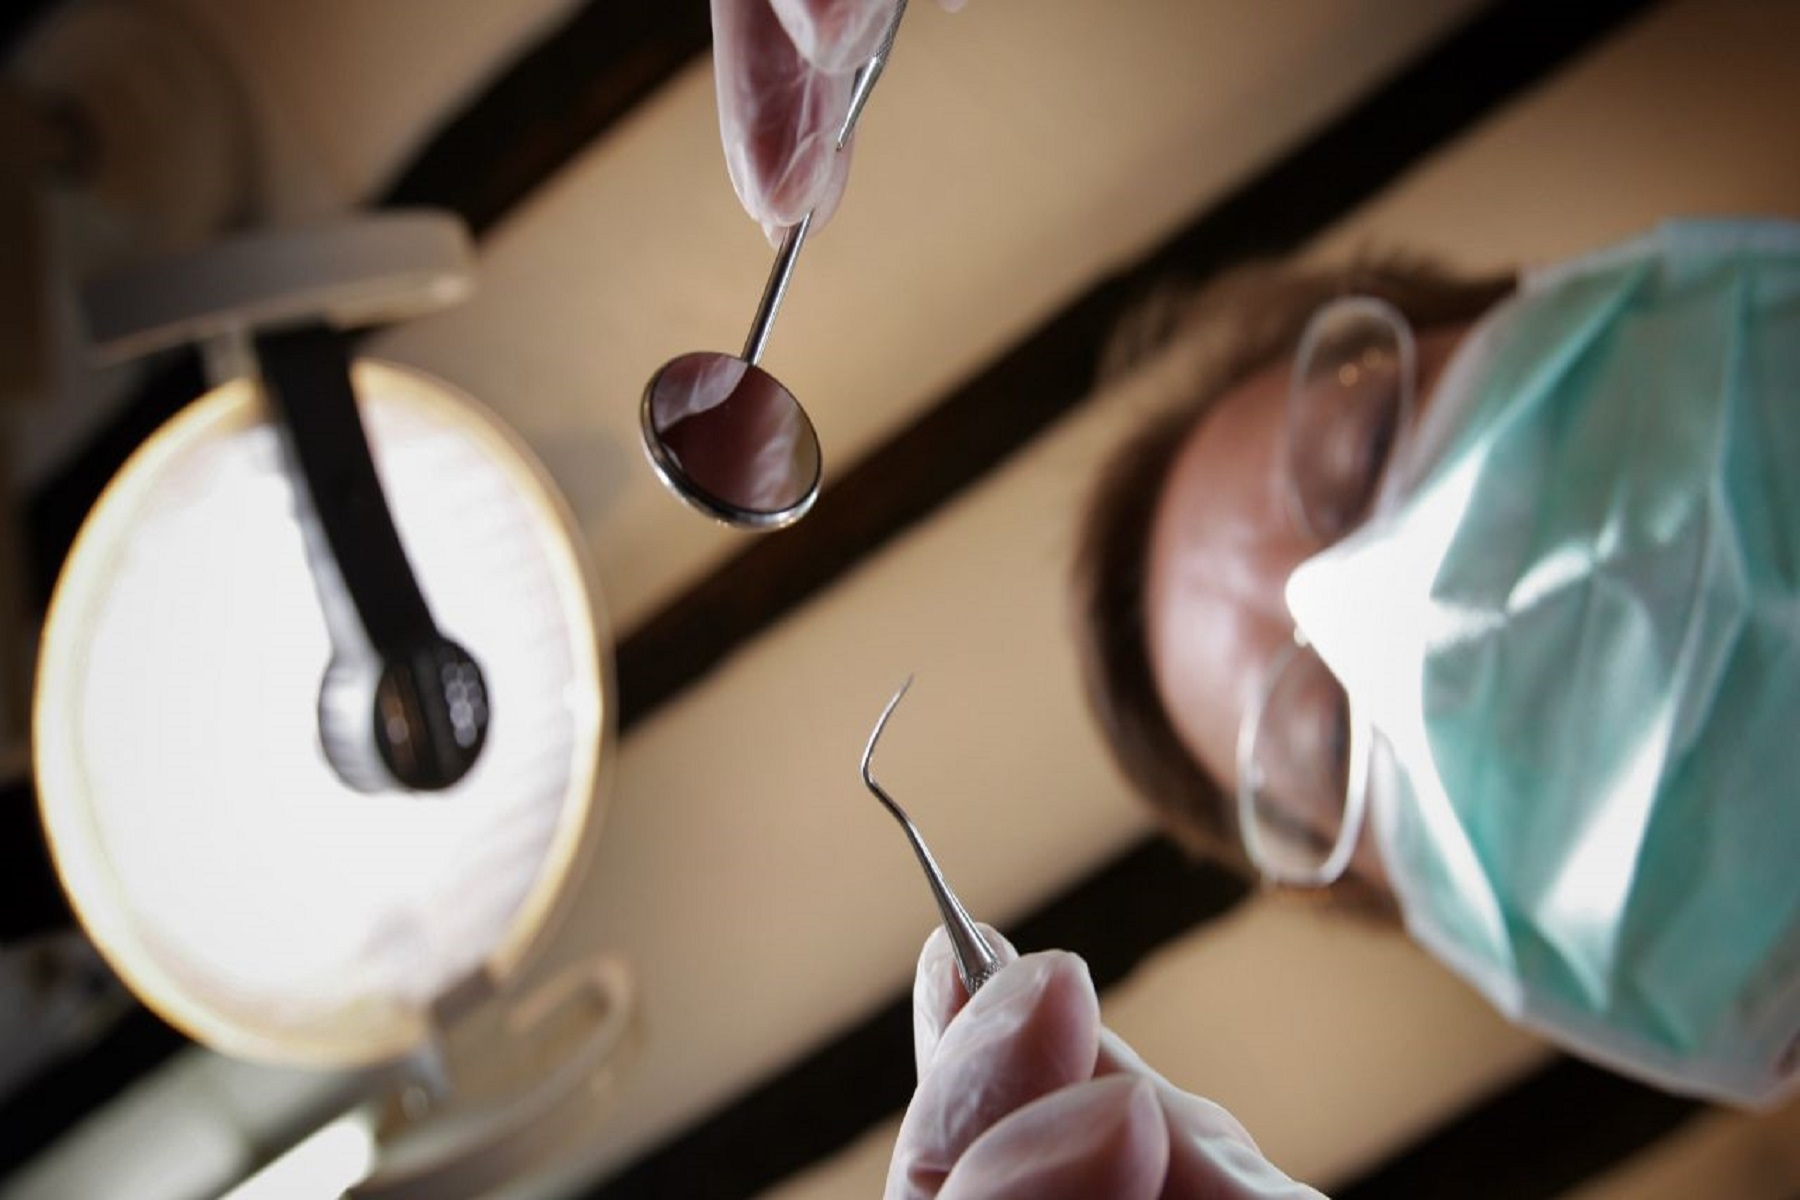 TikTok: Αποκαλύπτει τον οδοντίατρο που μπορεί να ανιχνεύσει την εγκυμοσύνη κοιτάζοντας το στόμα της ασθενούς